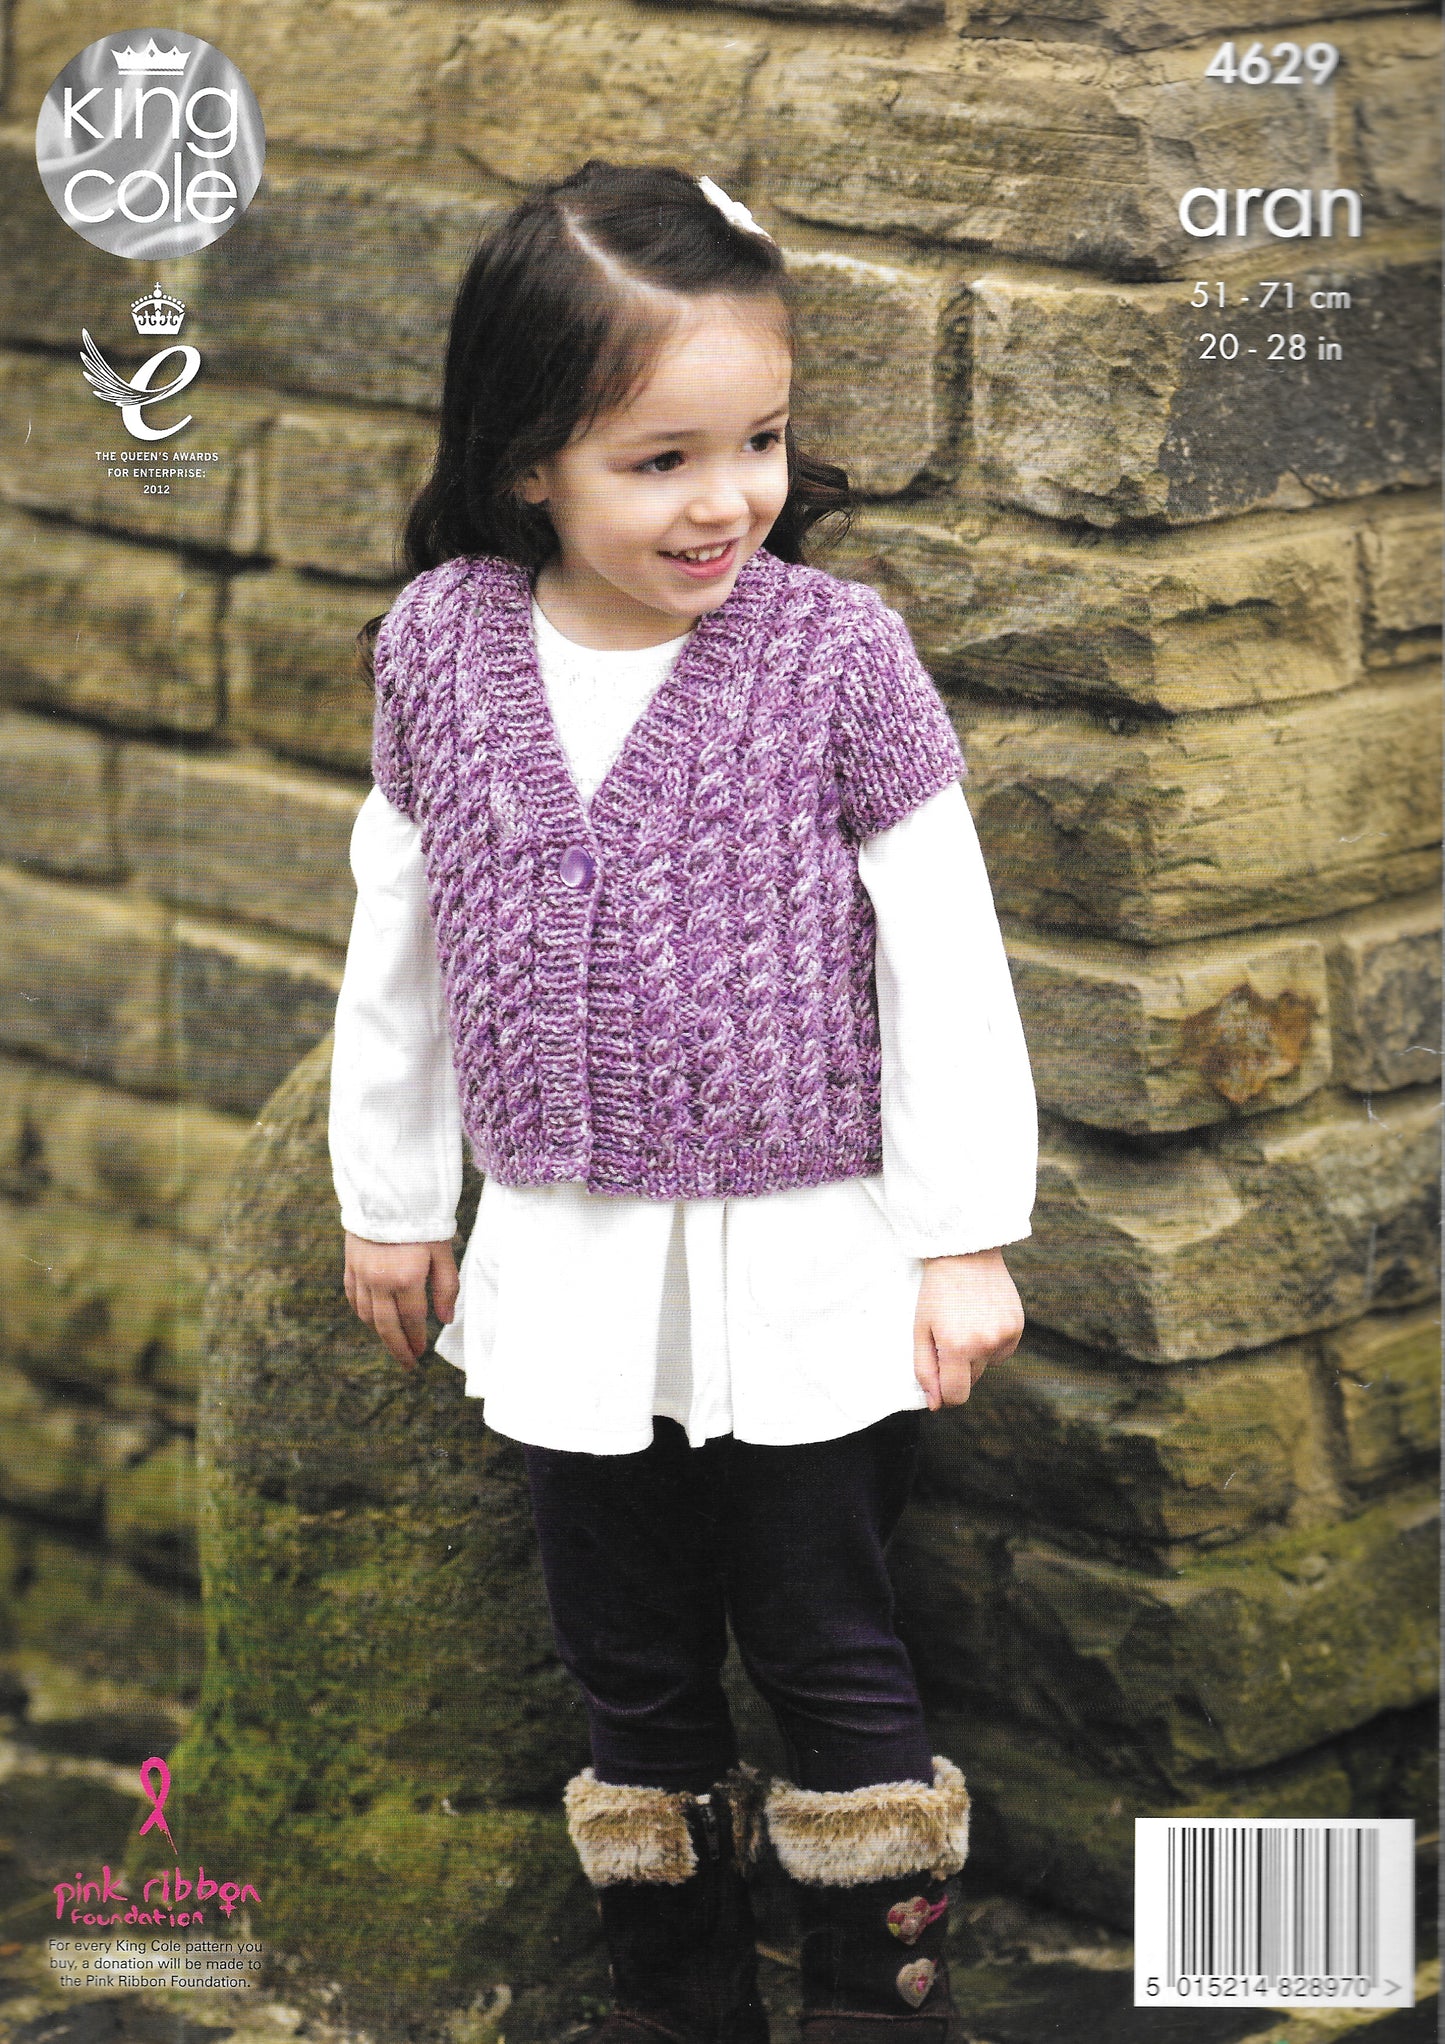 4629 King Cole knitting pattern. Child's cardigan. Aran